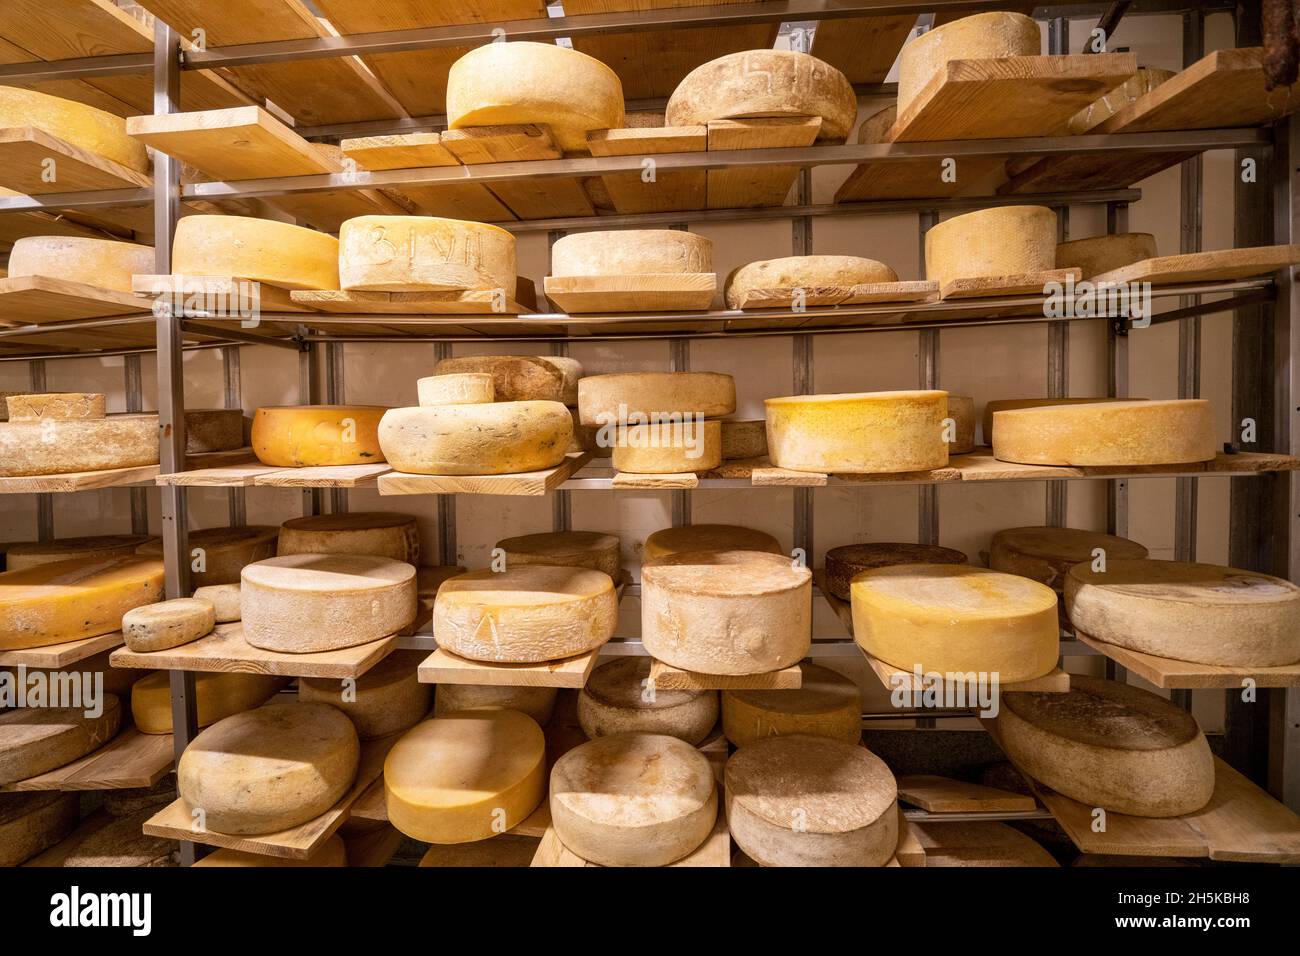 https://c8.alamy.com/comp/2H5KBH8/fresh-cheese-wheels-in-a-dairy-storage-room-in-covasna-county-romania-covasana-transylvania-romania-2H5KBH8.jpg